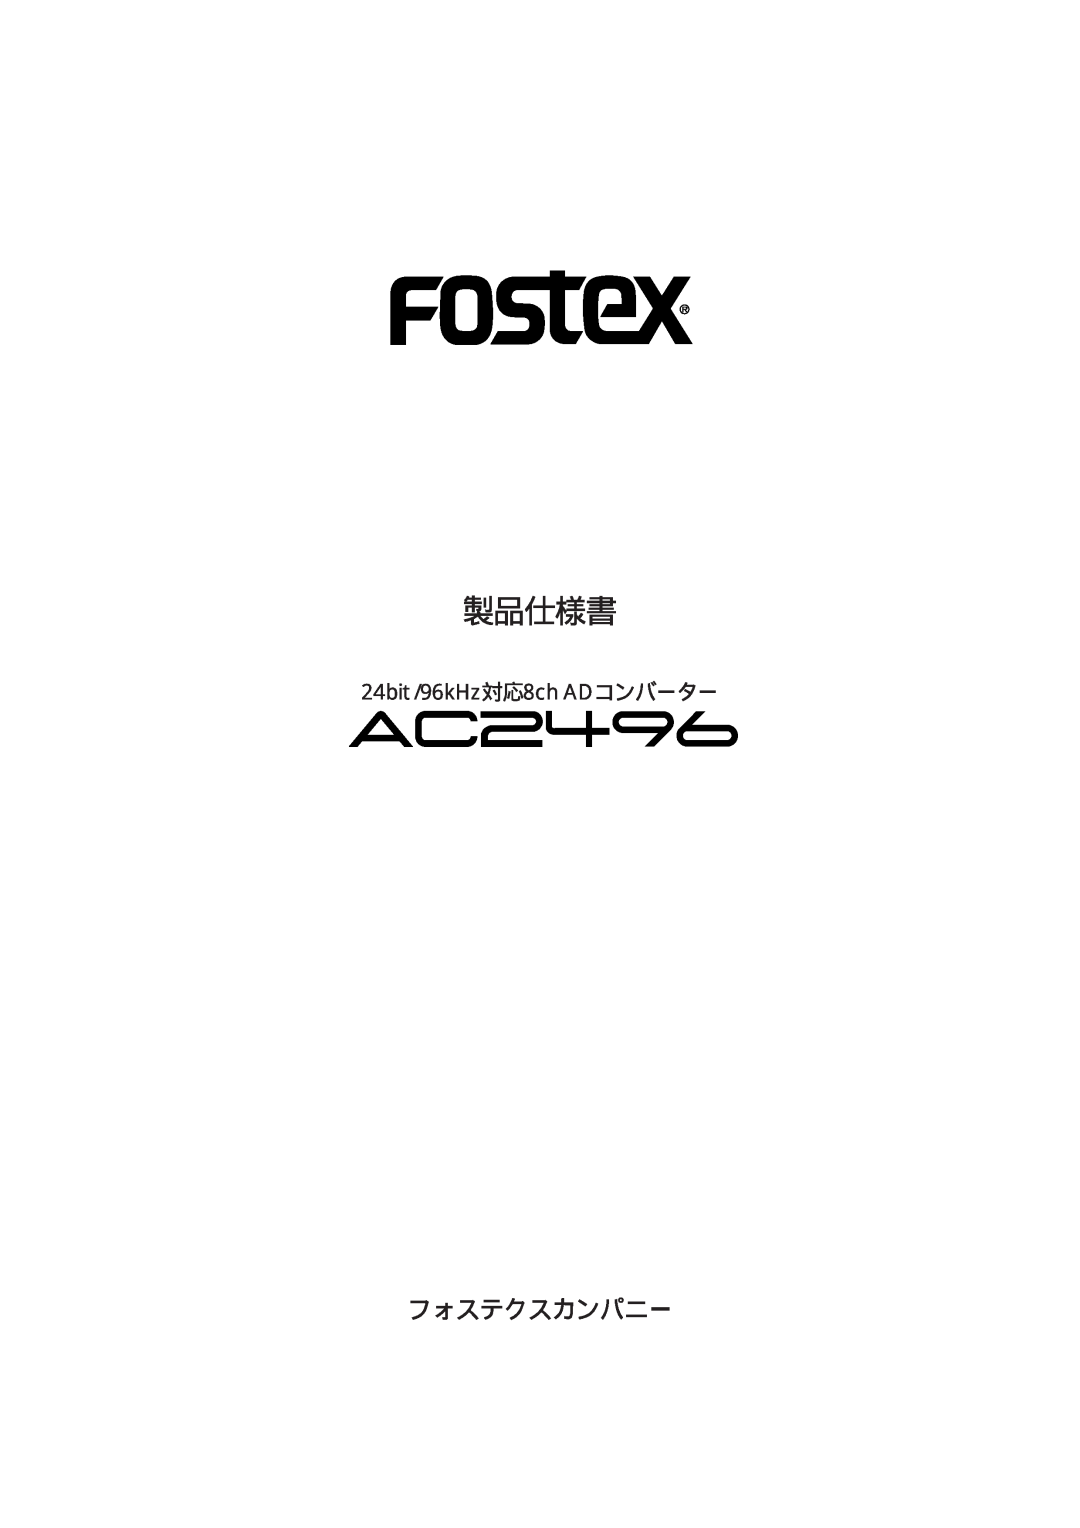 Fostex AC2496 manual 製品仕様書, フォステクスカンパニー, 24bit /96kHz対応8ch ADコンバーター 